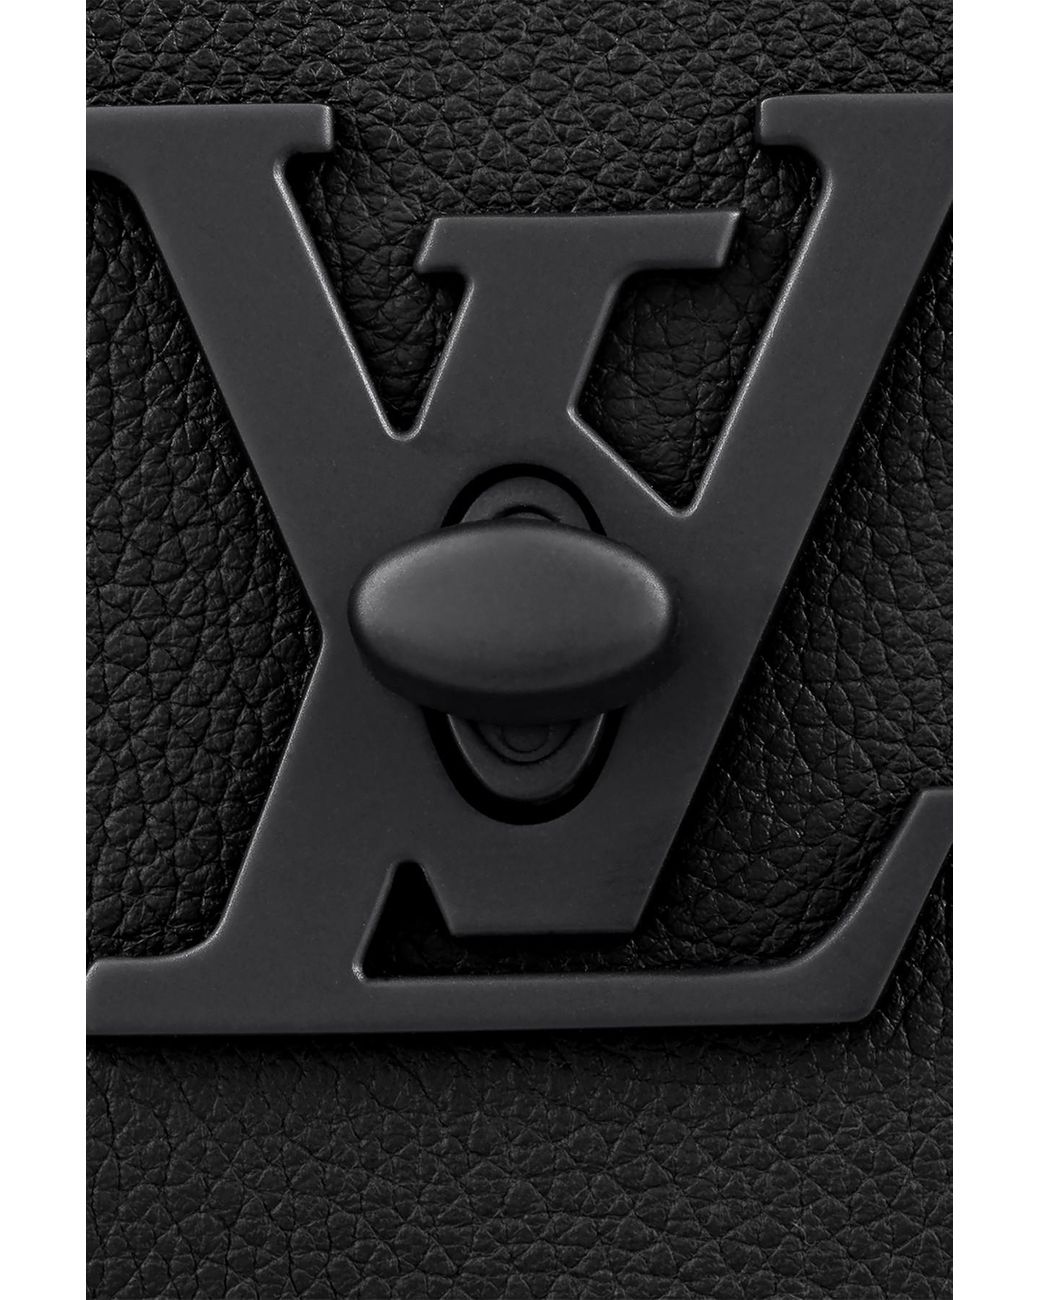 Billetera Louis Vuitton Monogram – The New Black